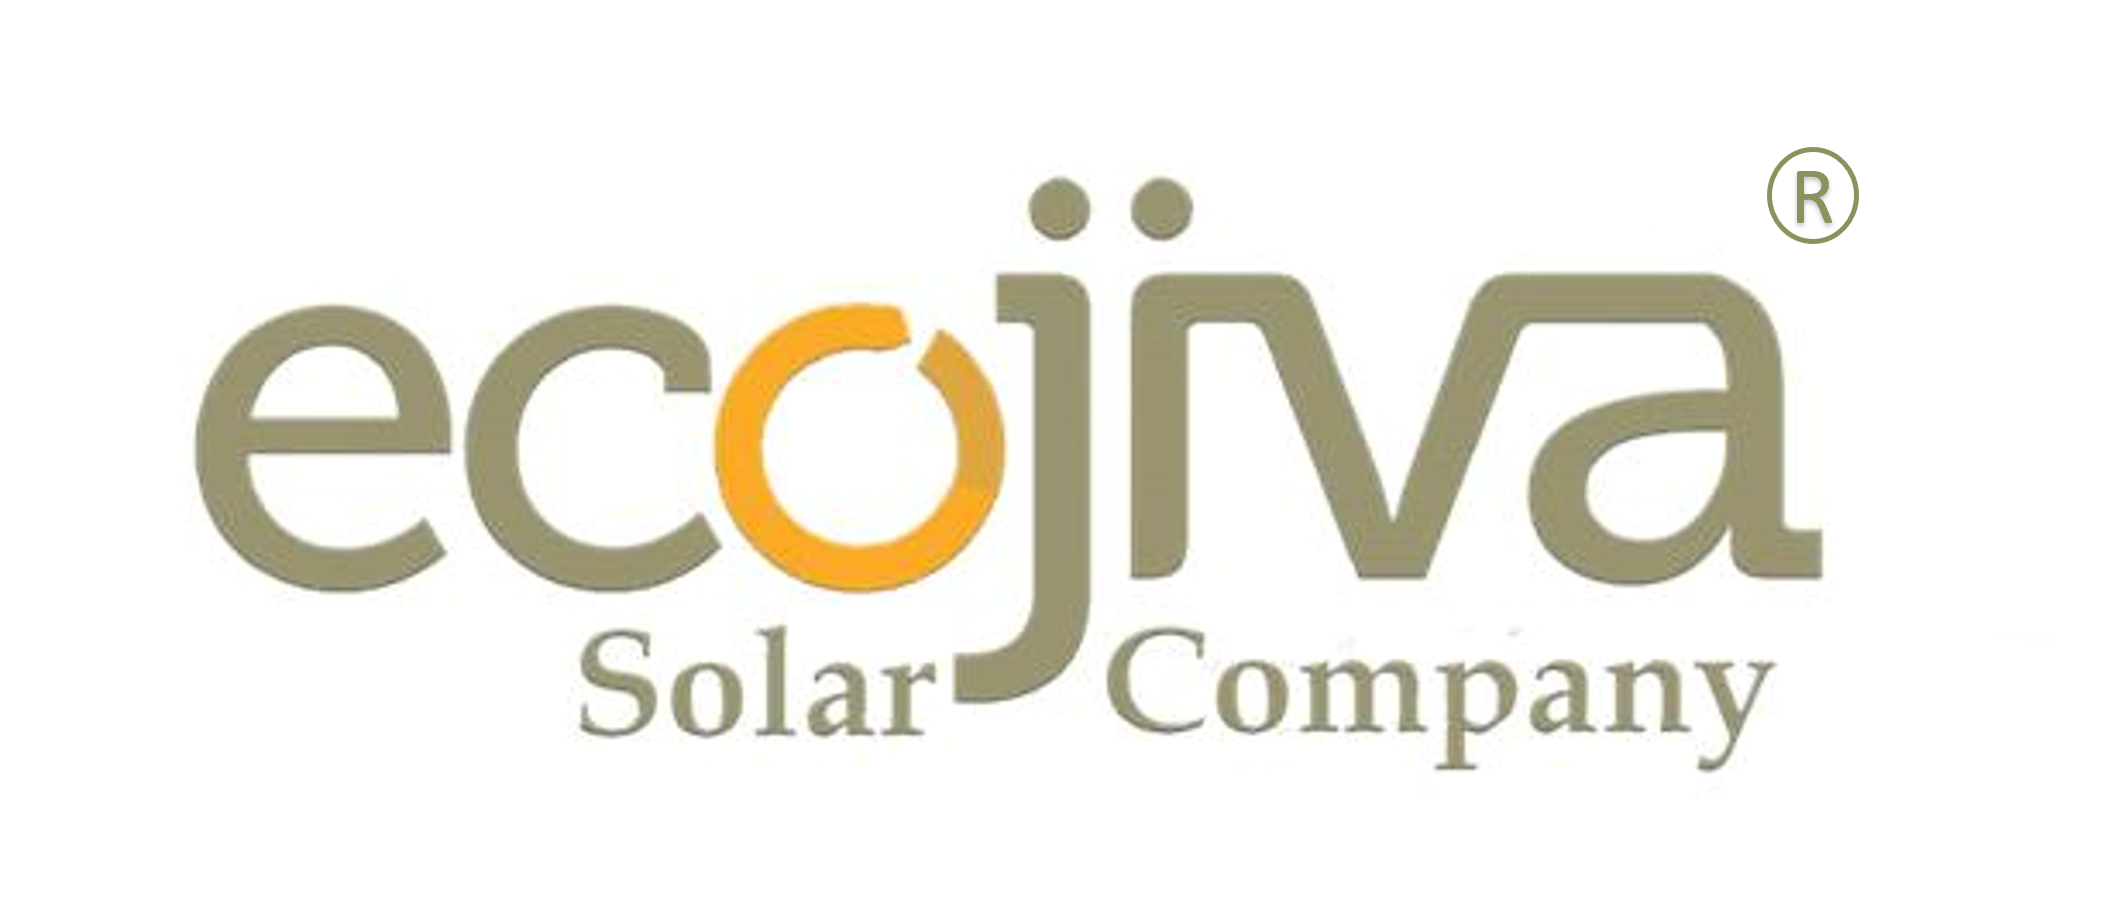 ecojiva LLC logo